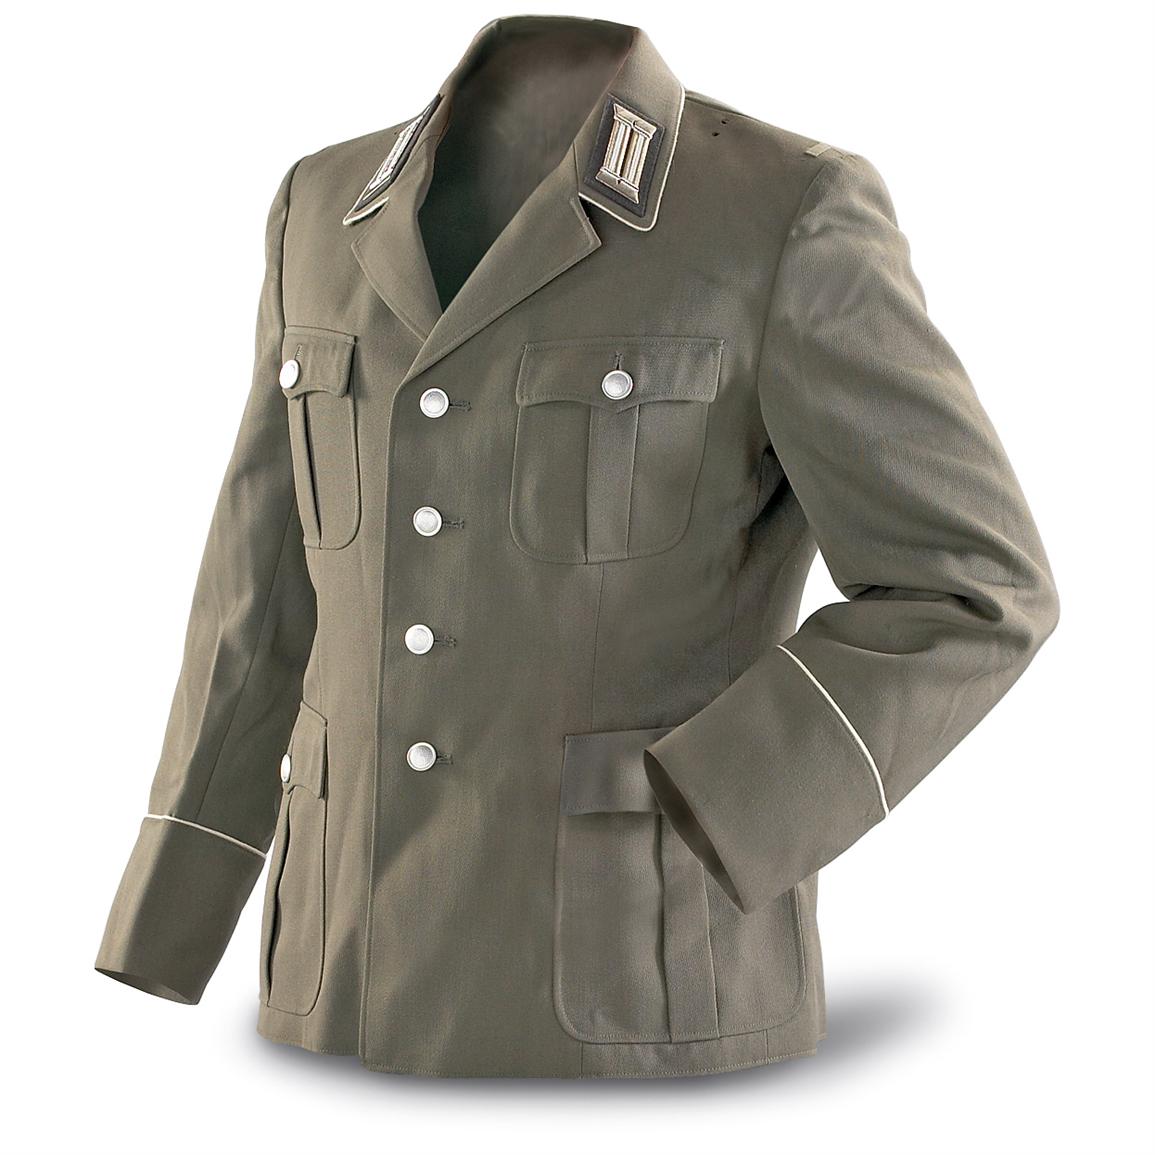 New East German Army Dress Jacket, Olive Drab 156175, Military Field